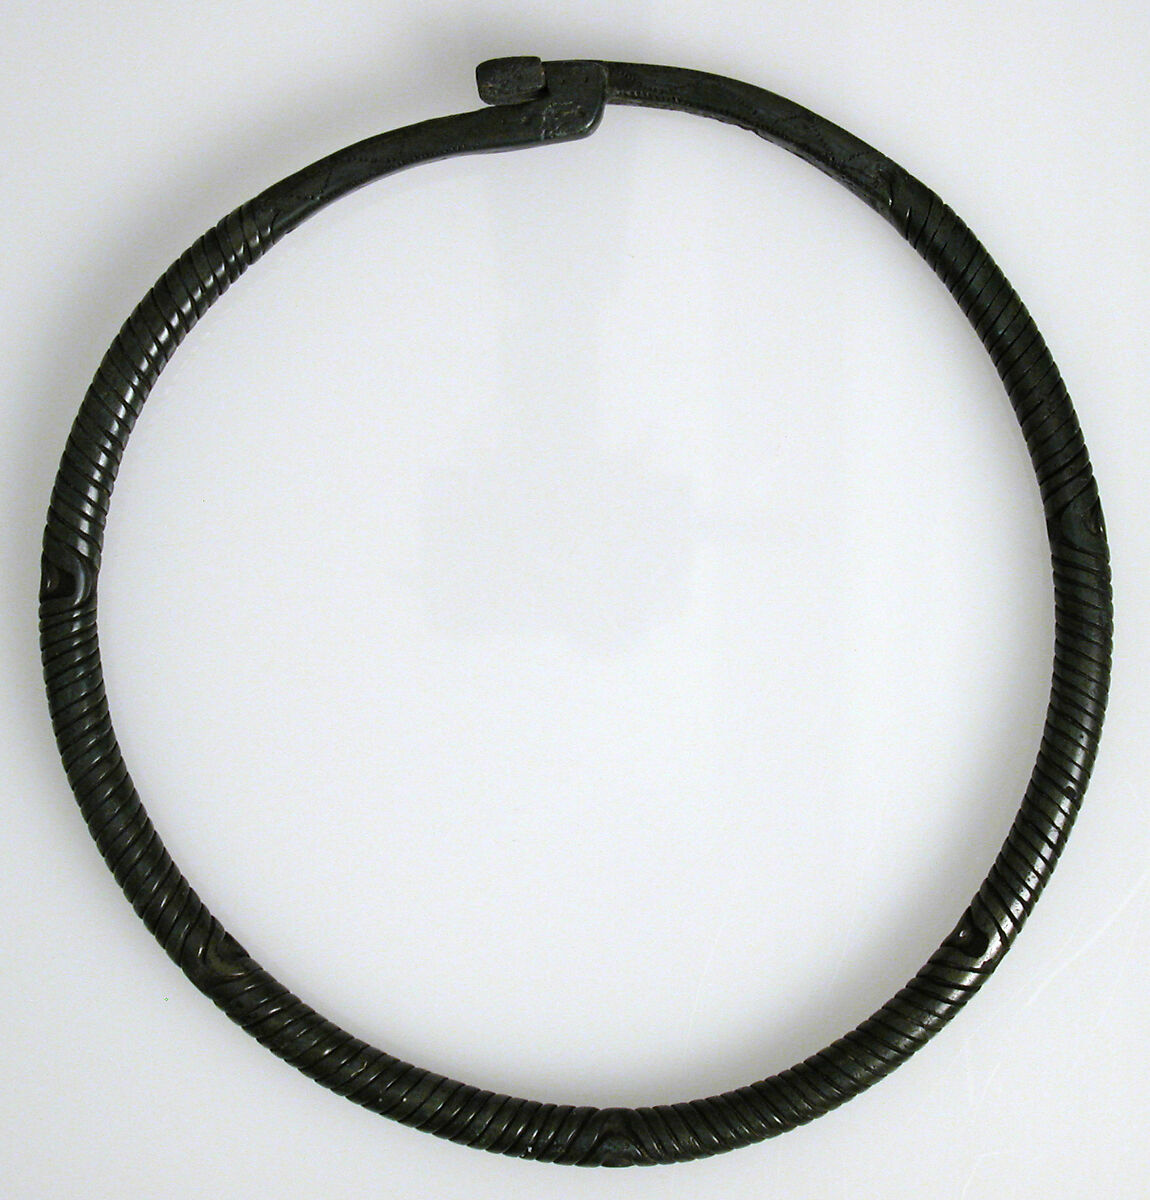 Neck Ring (Torque), Copper alloy, Scandinavian 